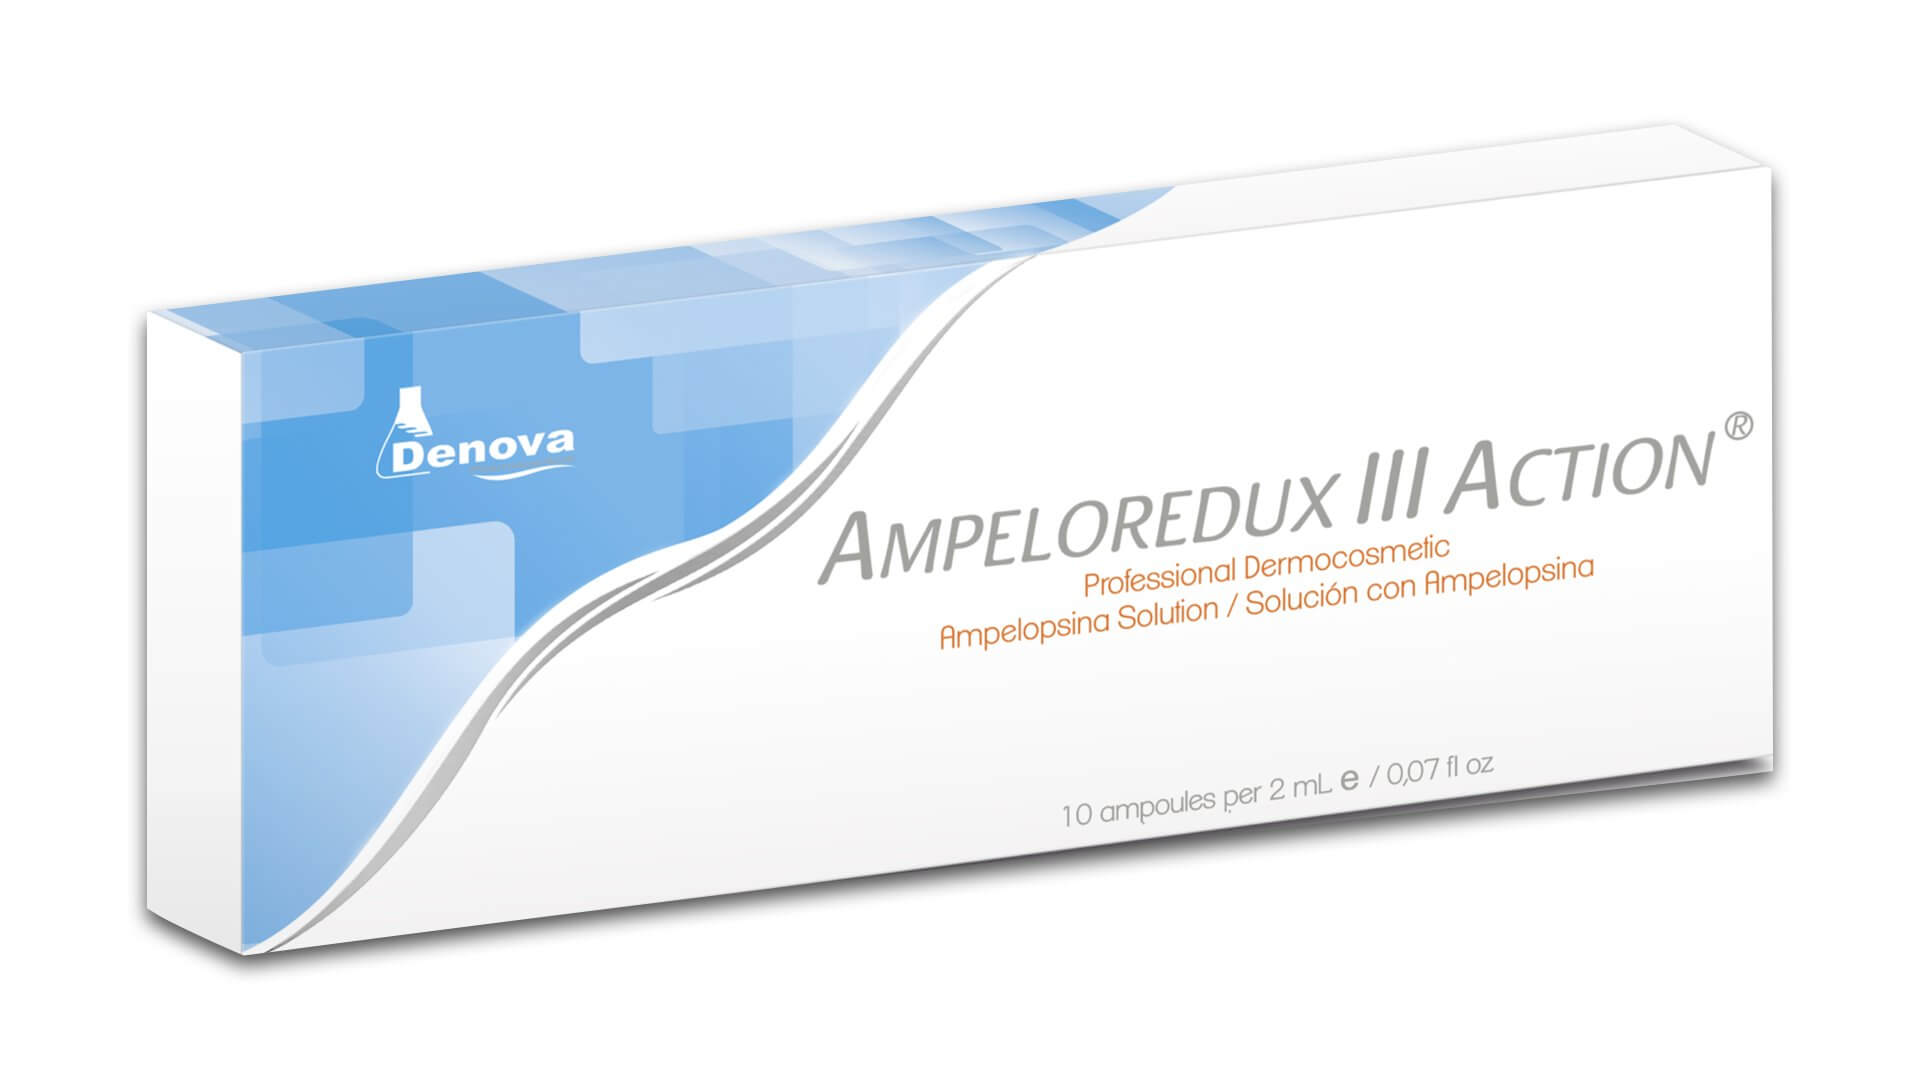 Ampeloredux III Action